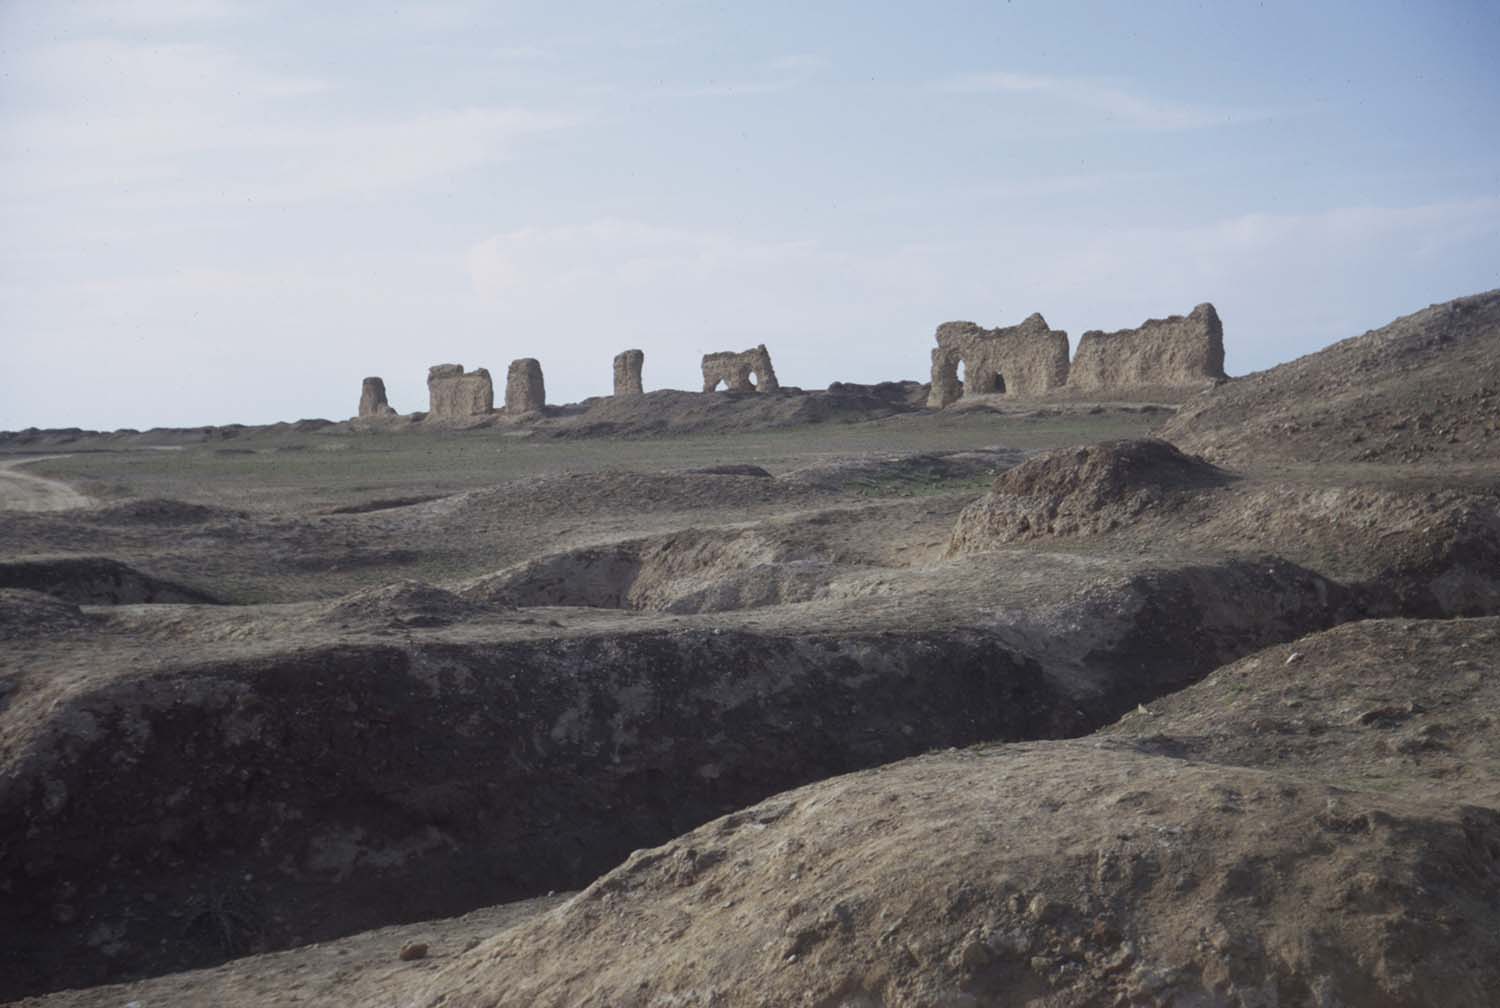 Dar al-Khilafa (Samarra) - Ruins at Samarra, possibly part of Dar al-Khilafa Complex.